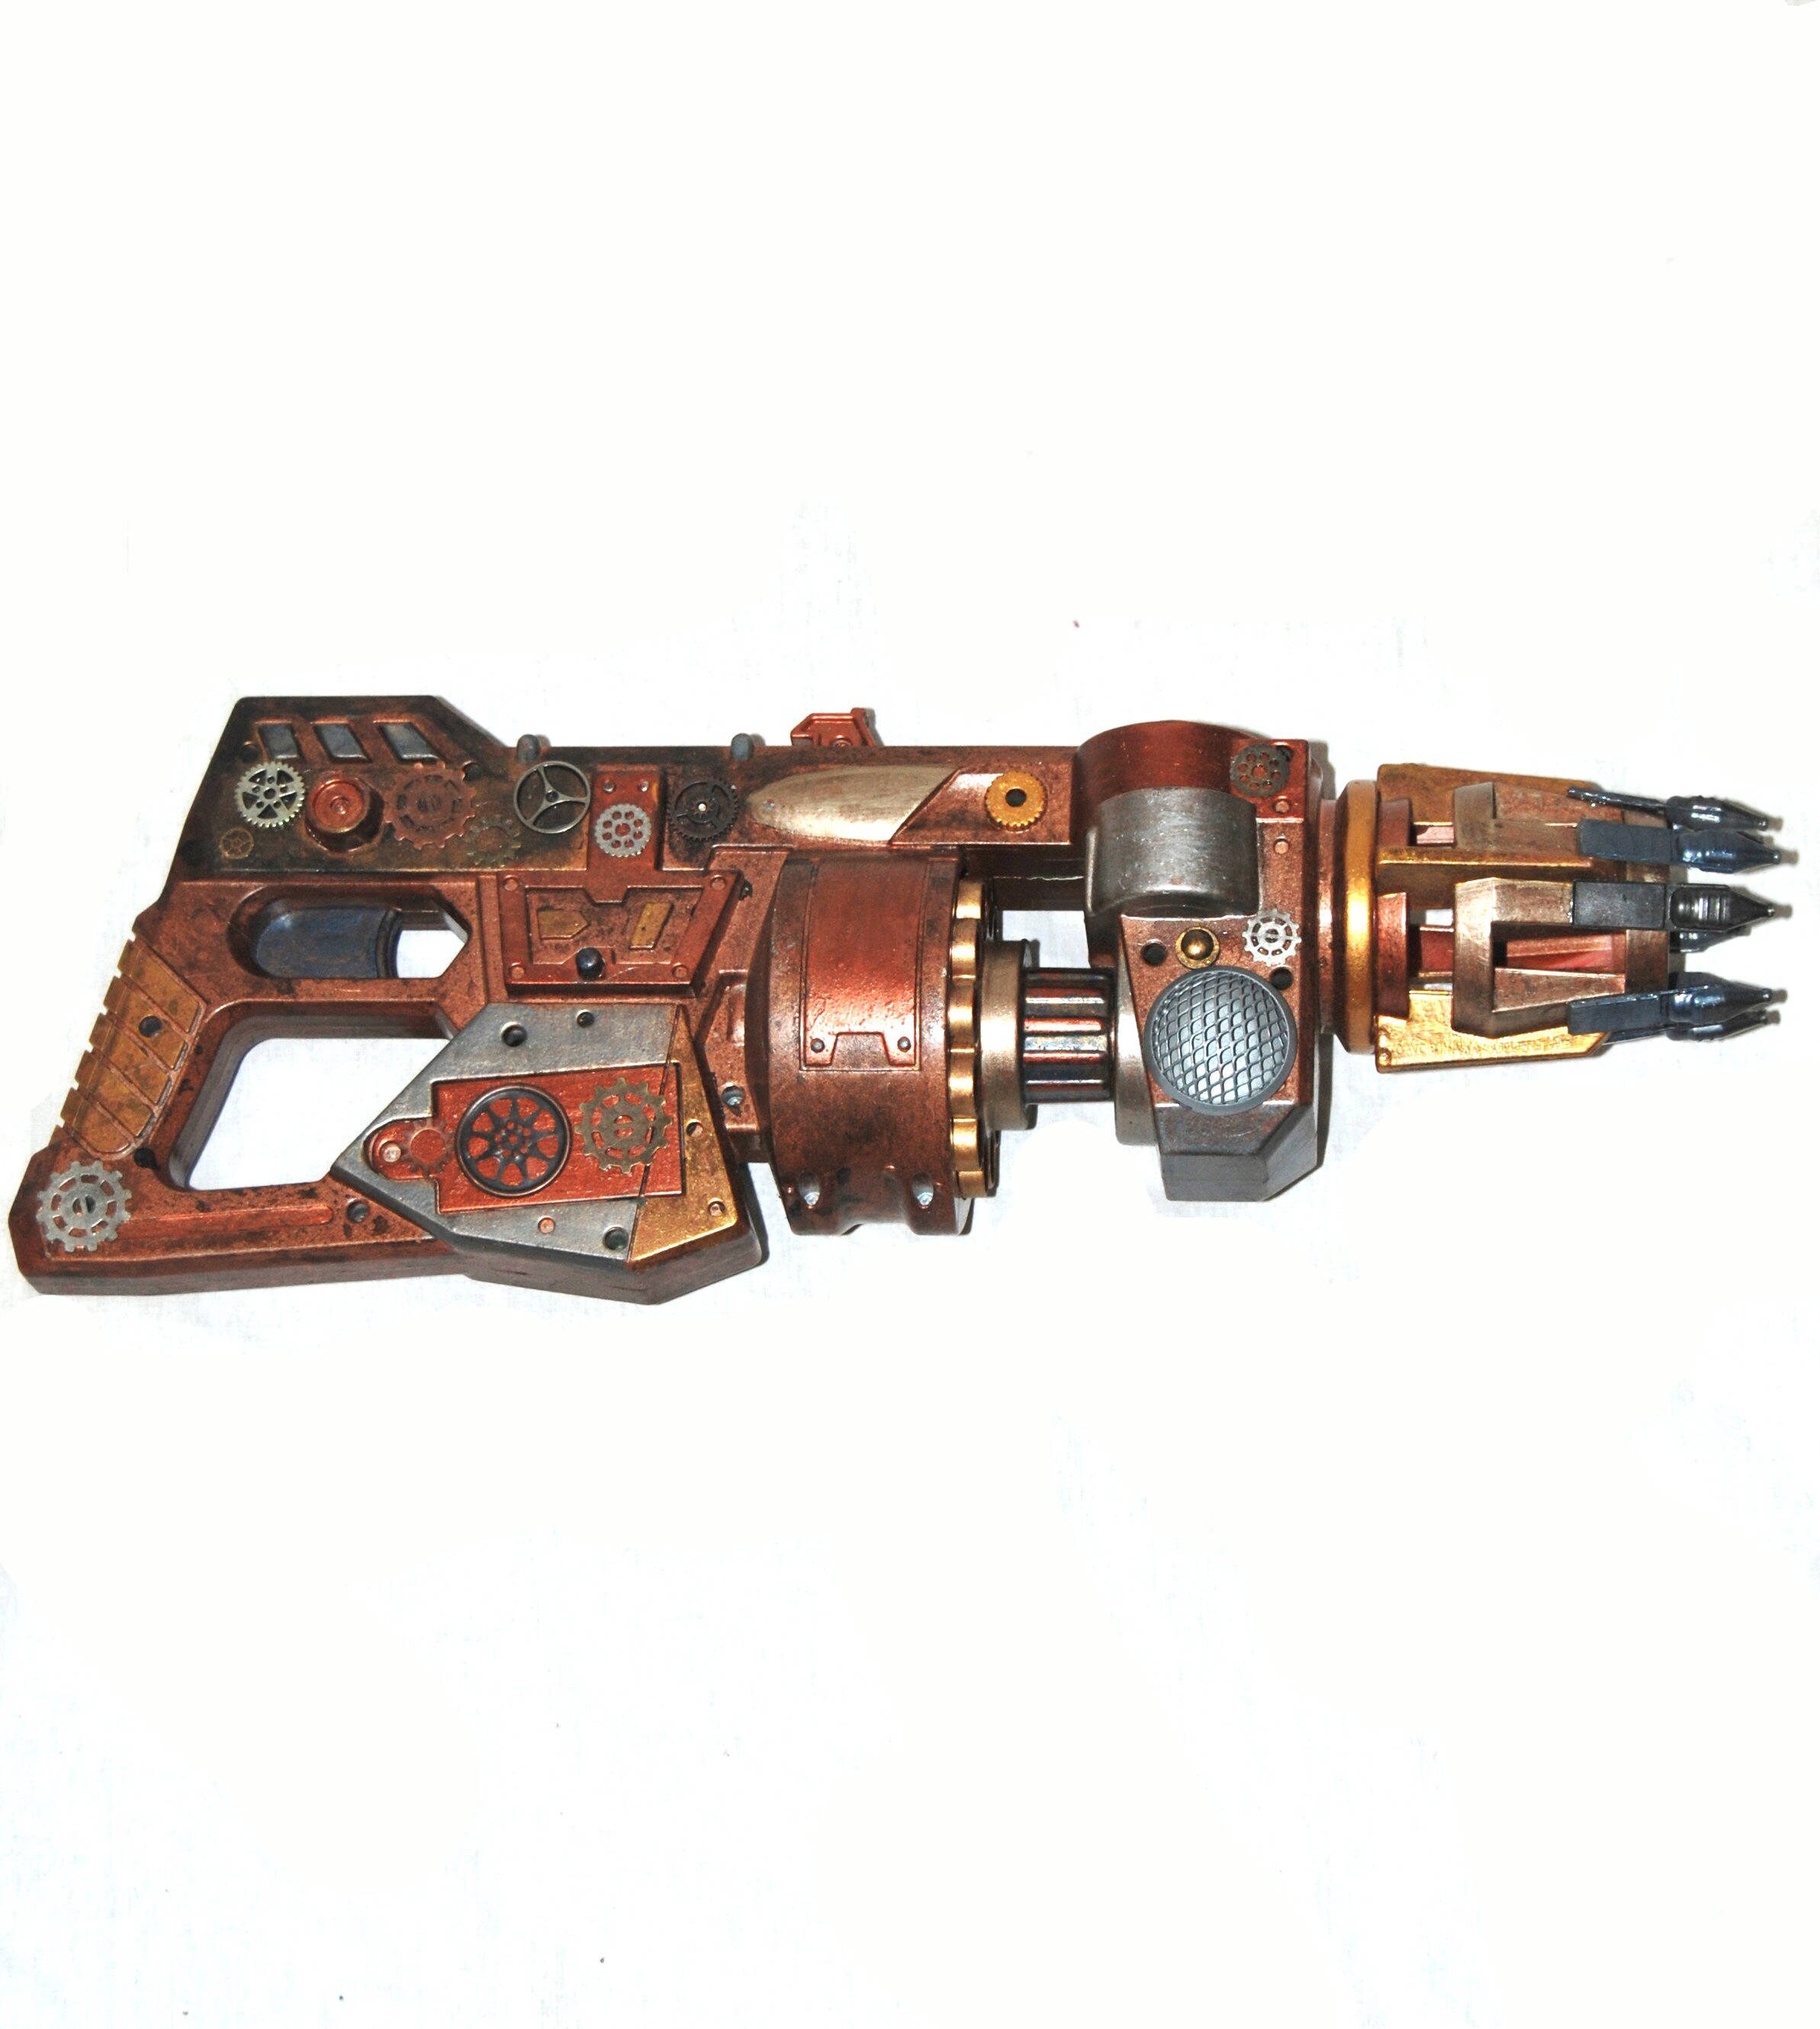 Big Steampunk Gun Cosplay Costume Prop Apocalyptic Weapon